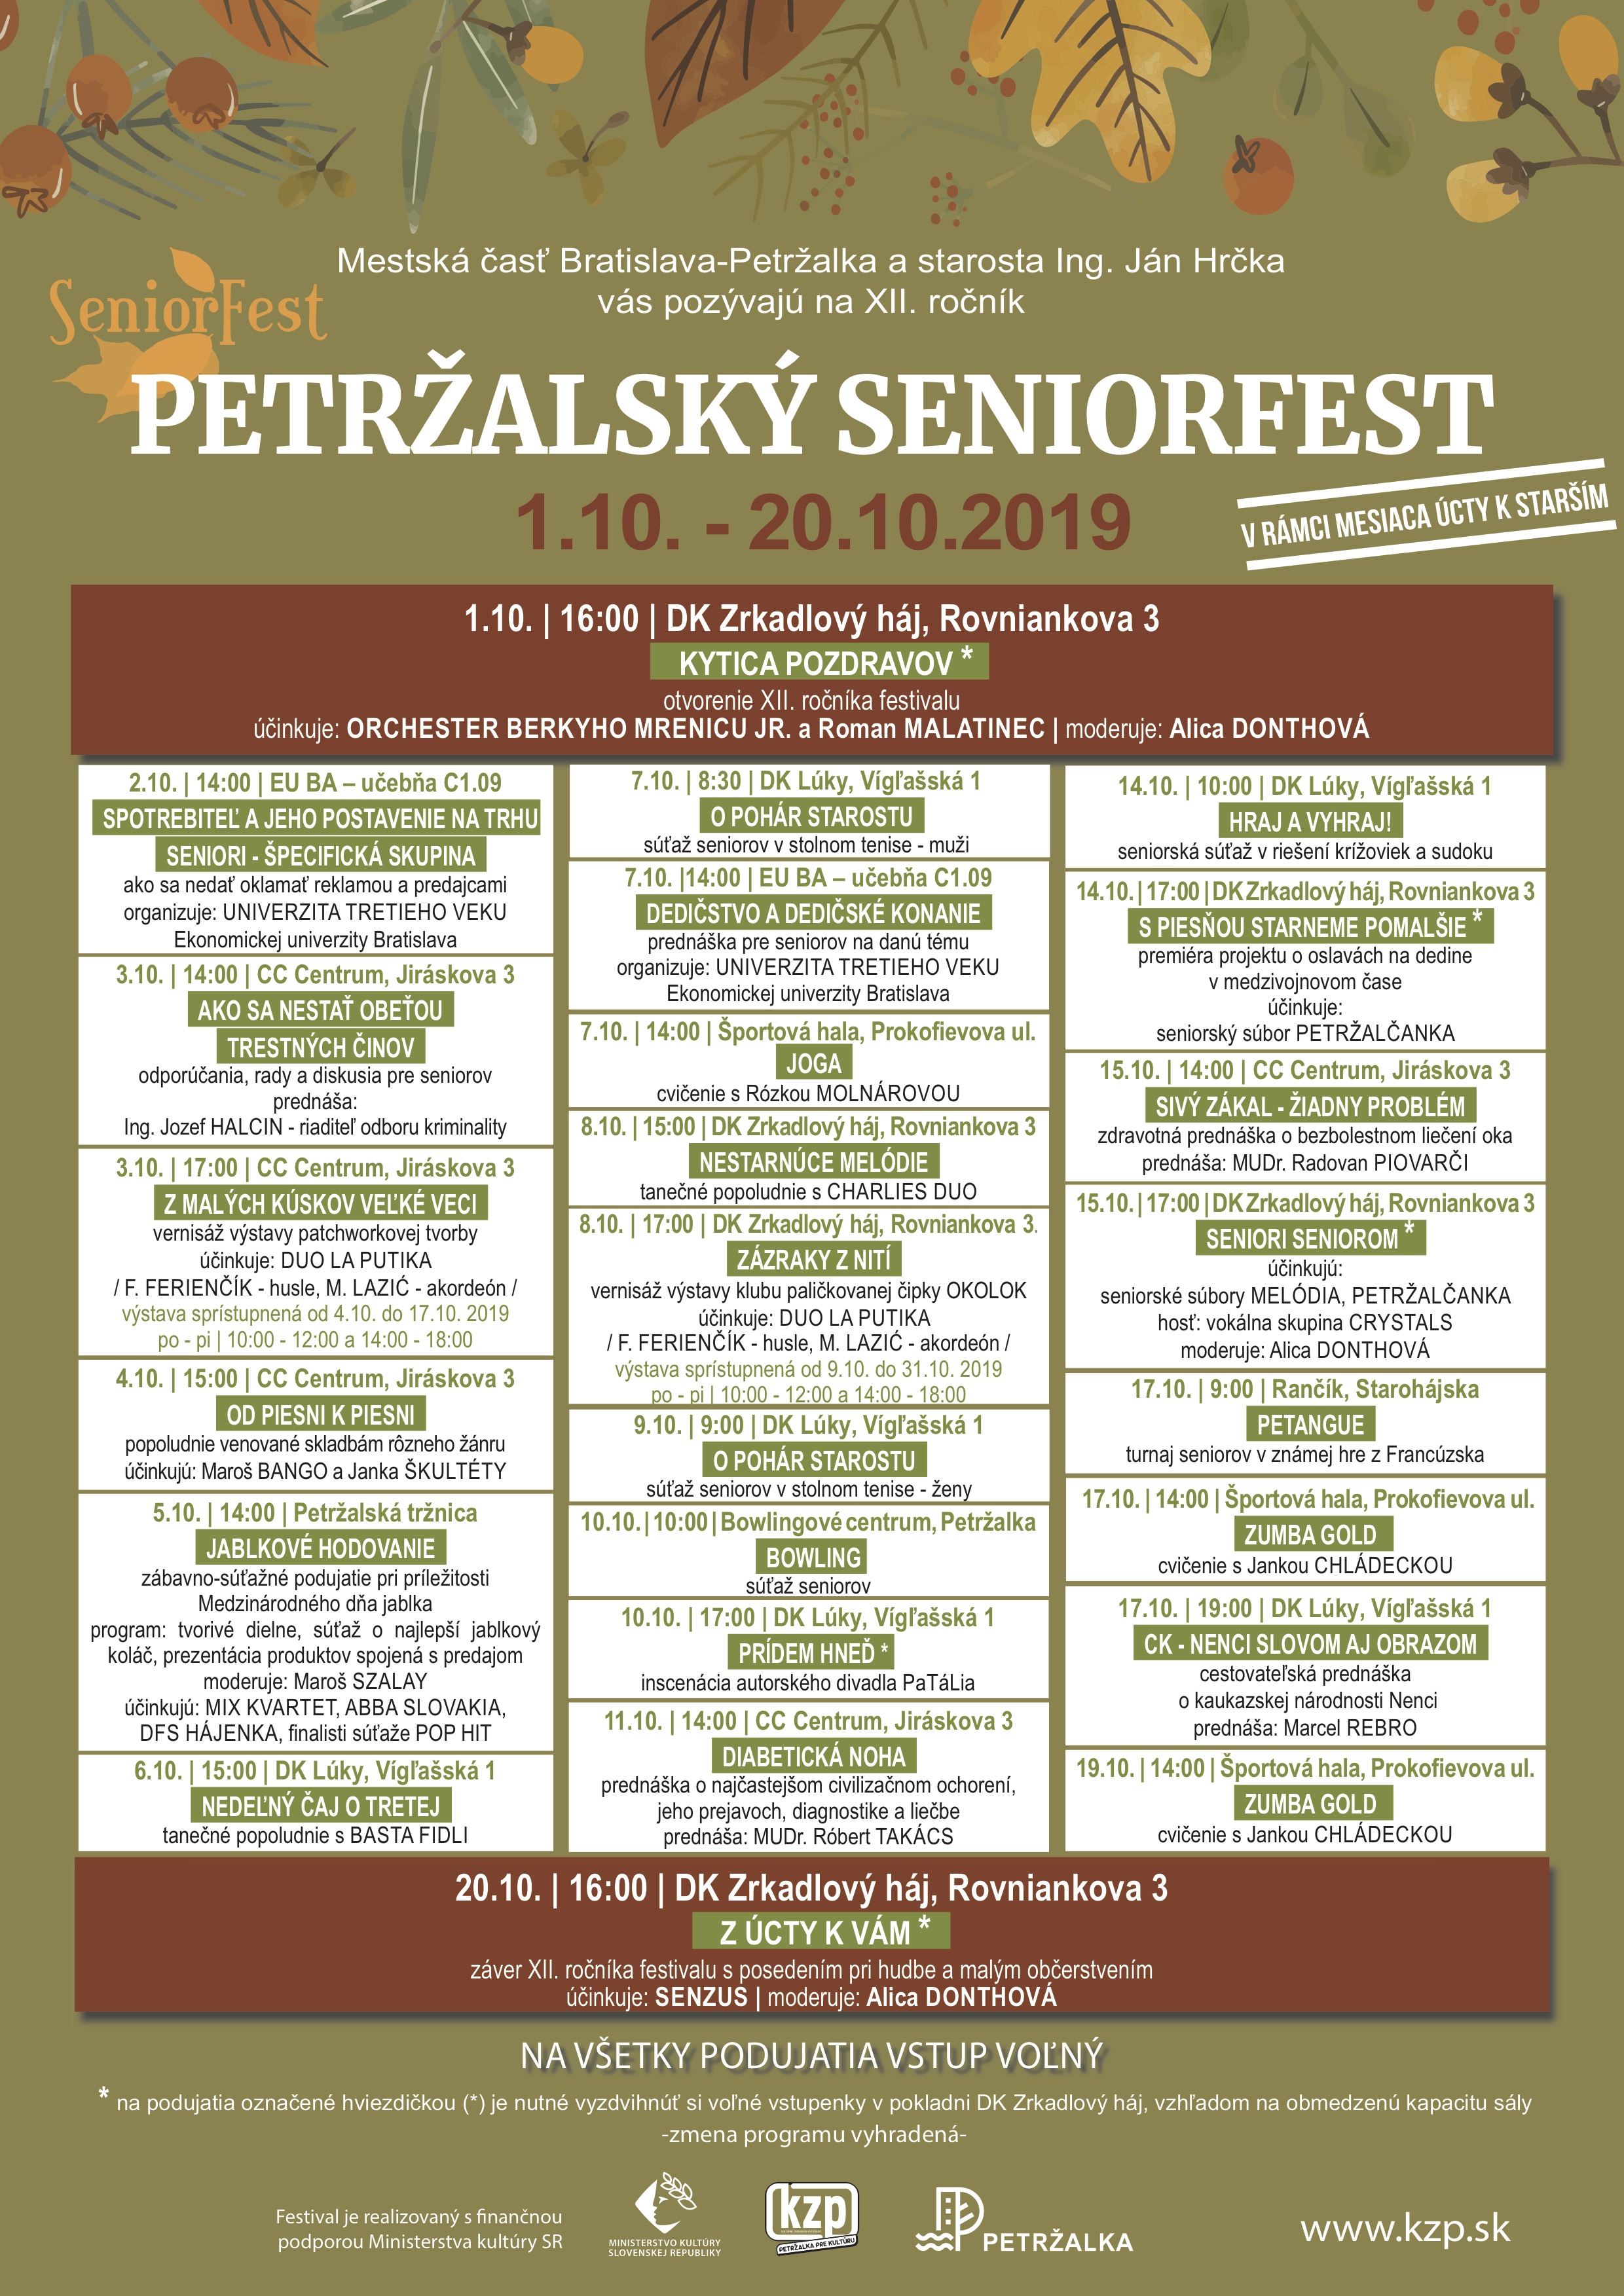 Petralsk SeniorFest 2019 - 12. ronk